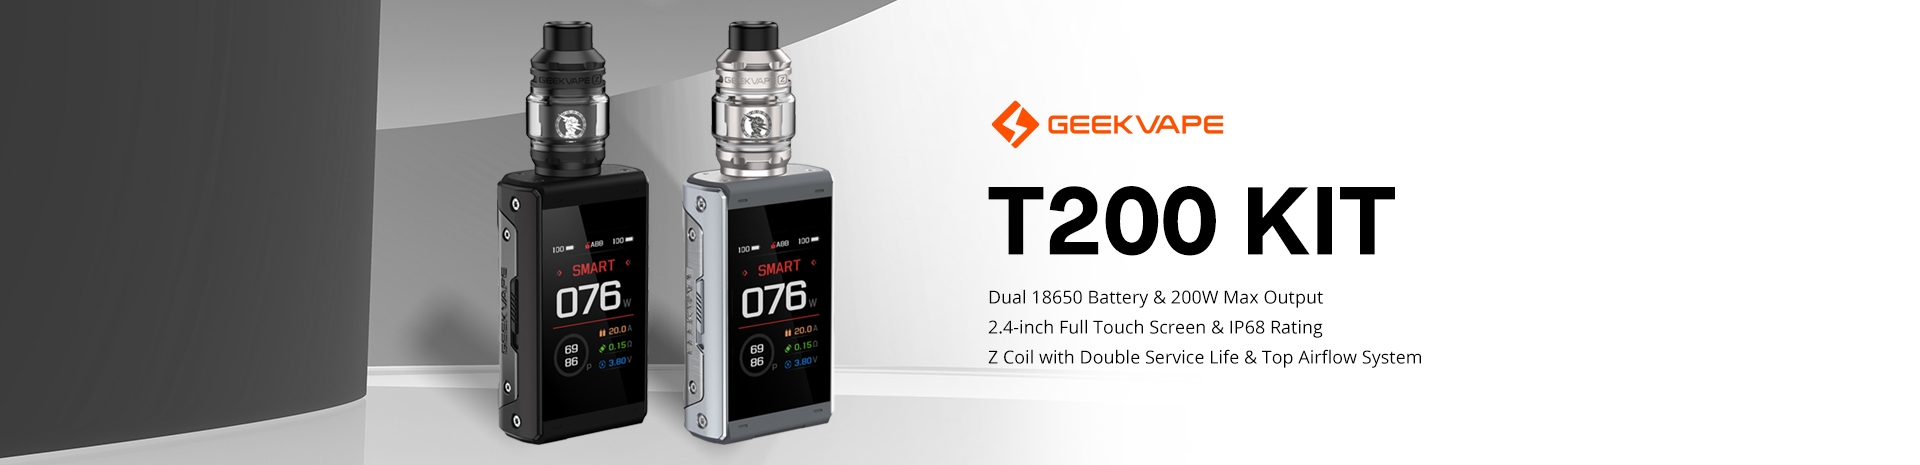 GeekVape T200 Mod Kit